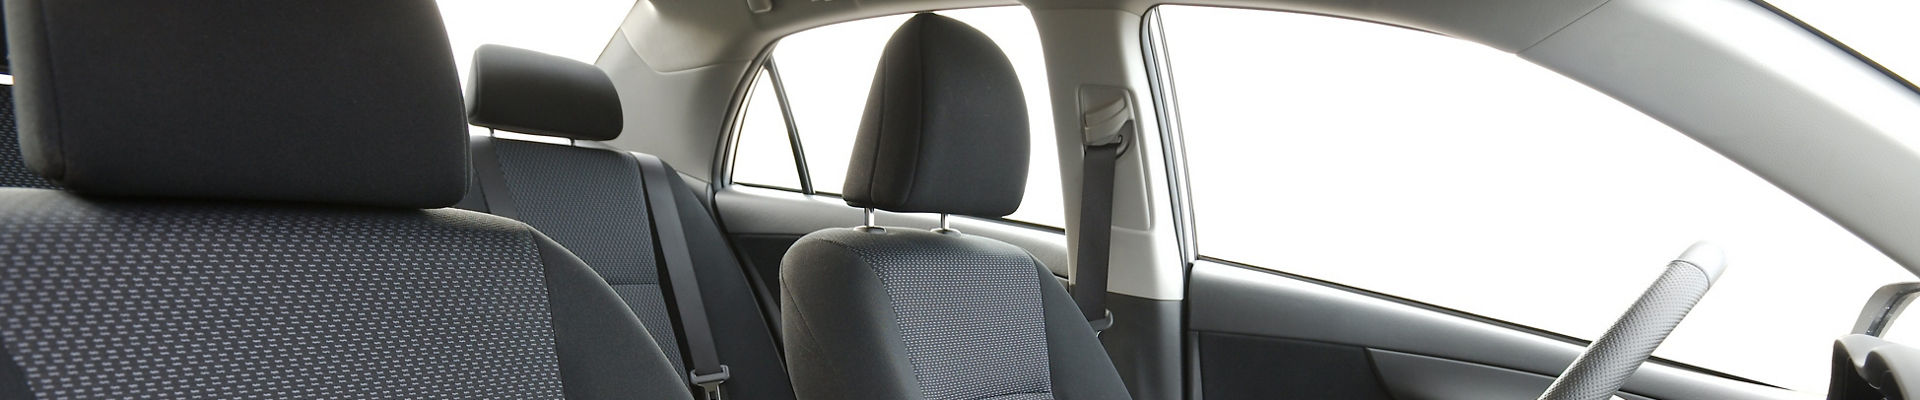 Black car interior with foam seats